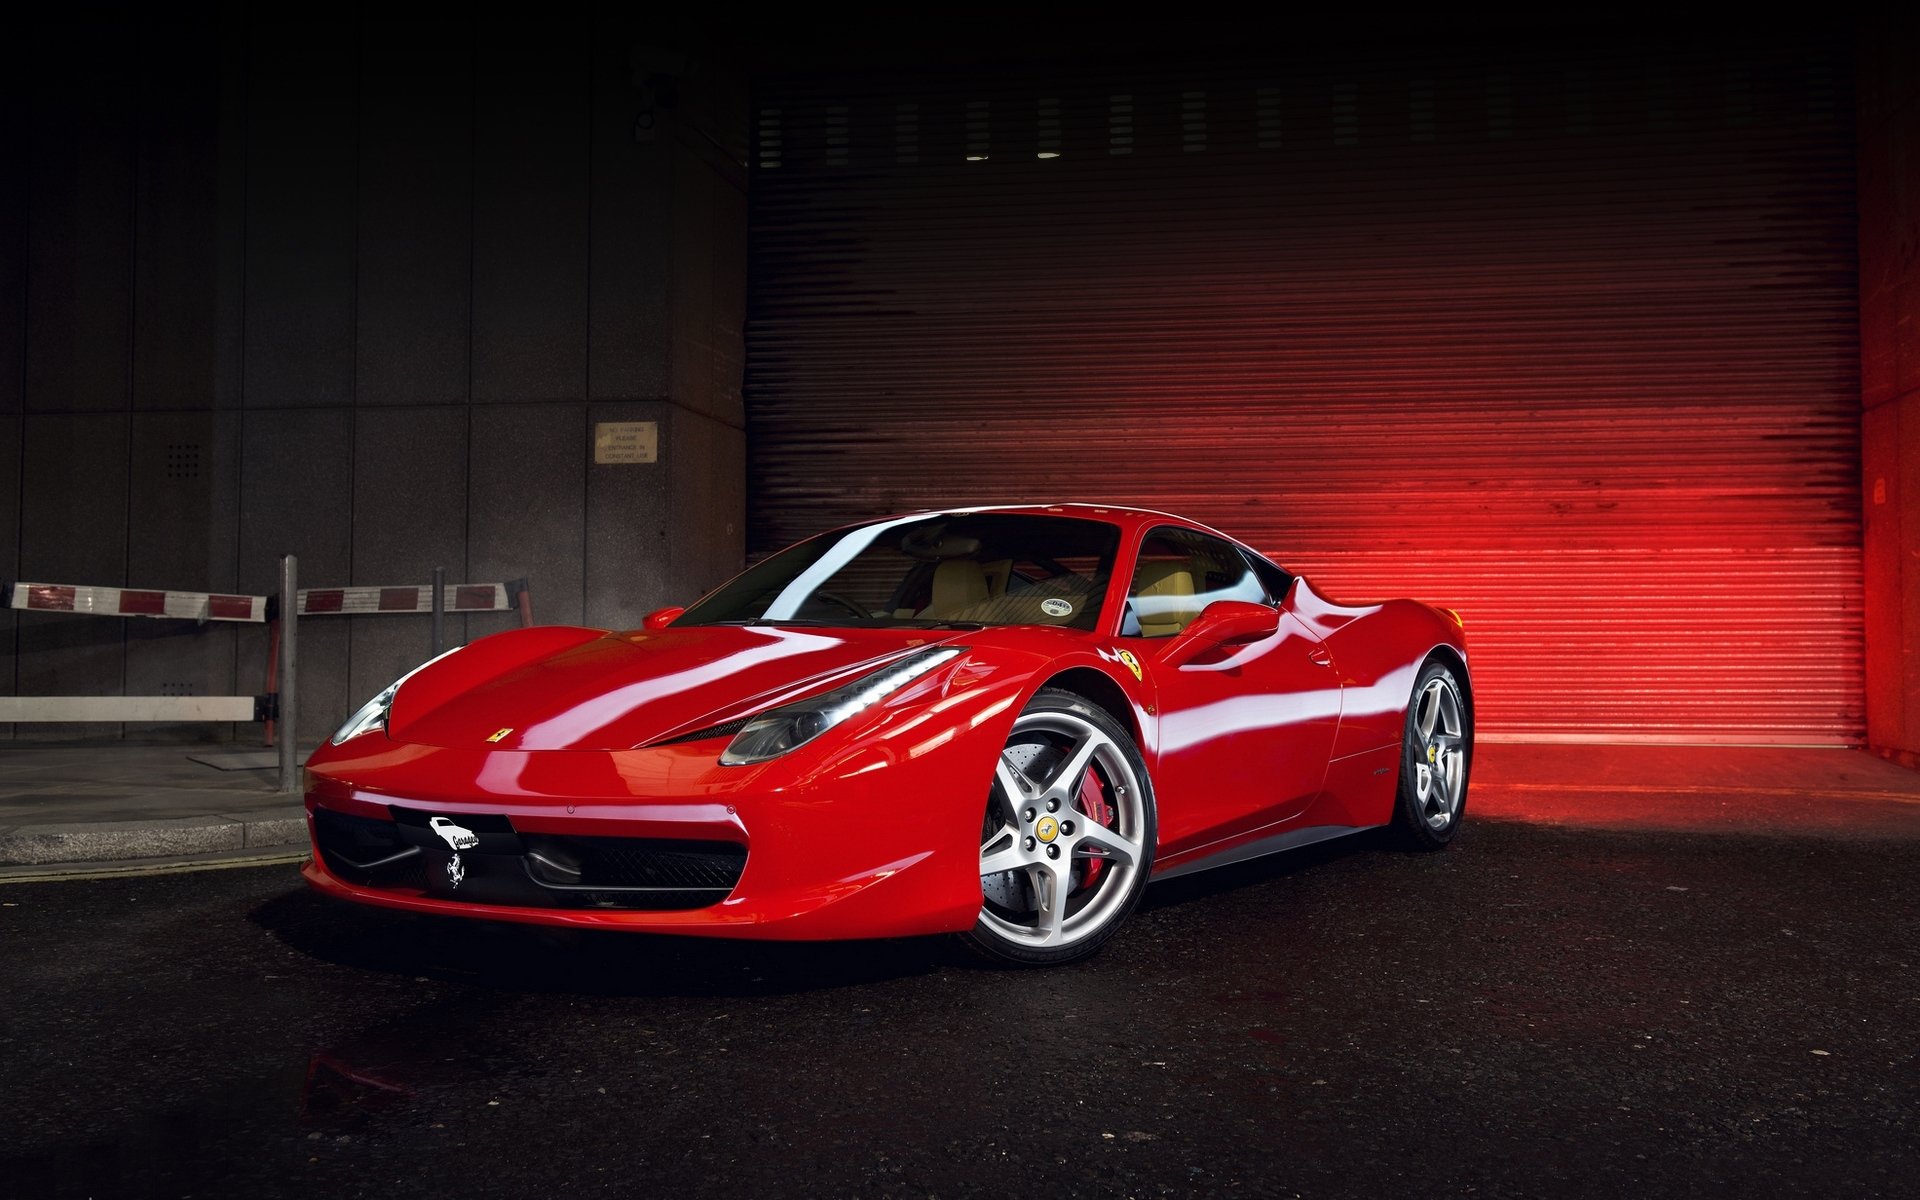 Ferrari-458 Full HD Wallpaper and Background Image | 1920x1200 | ID:475953